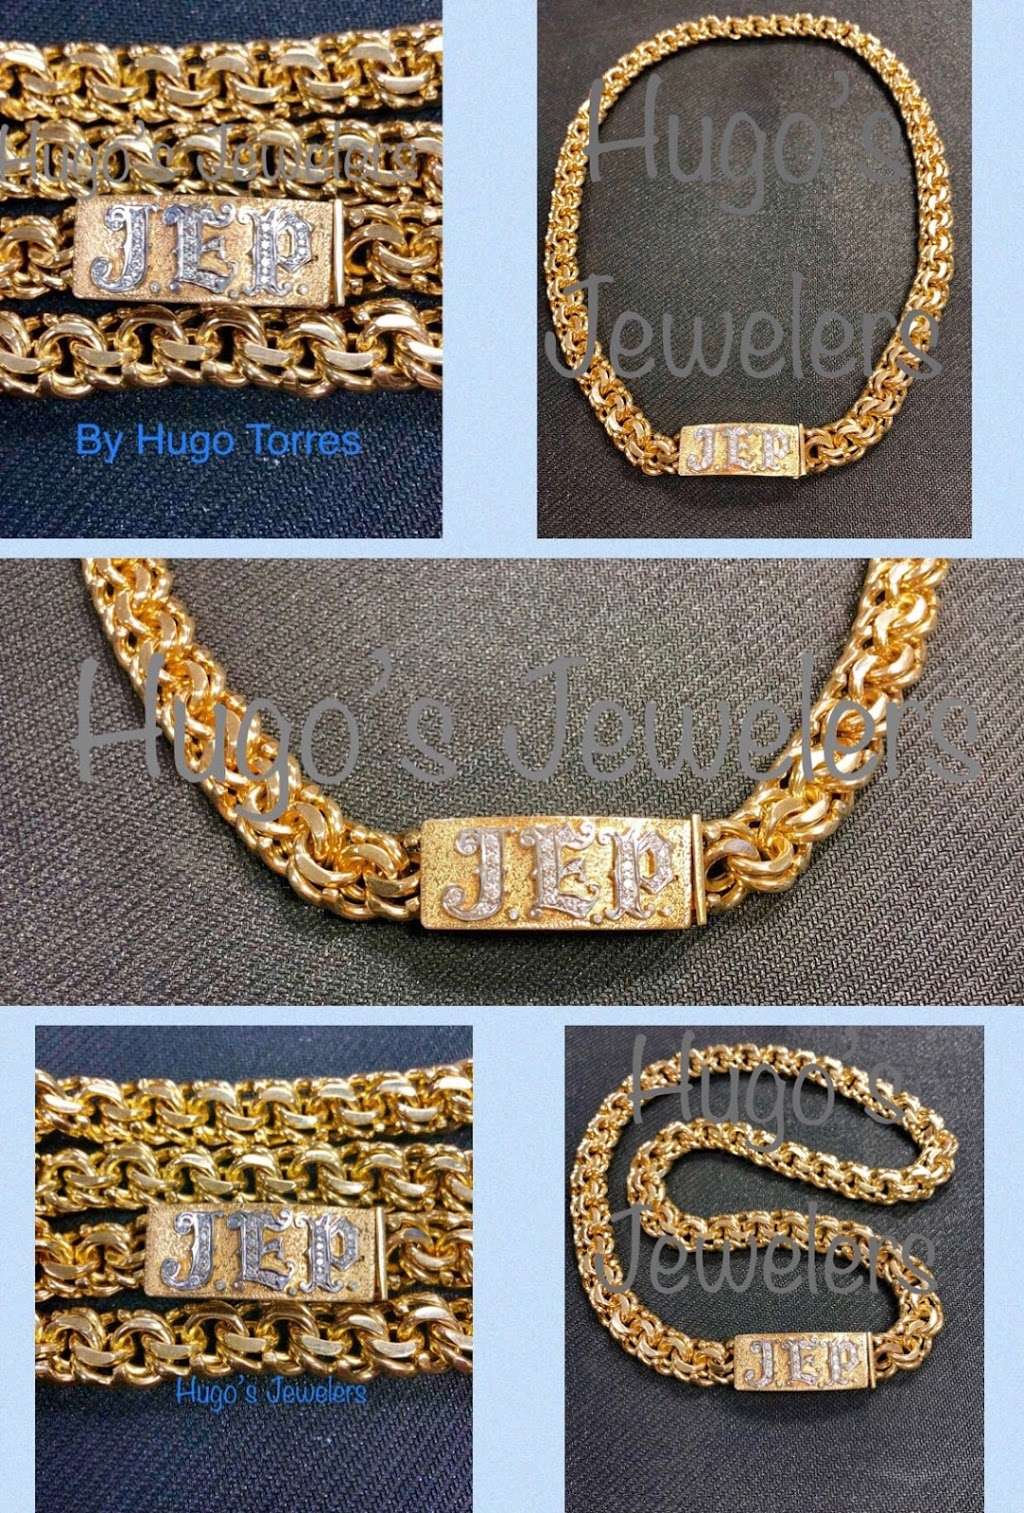 Hugos Jewelers LLC | 4438 Culebra Rd #6, San Antonio, TX 78228, USA | Phone: (210) 437-0520